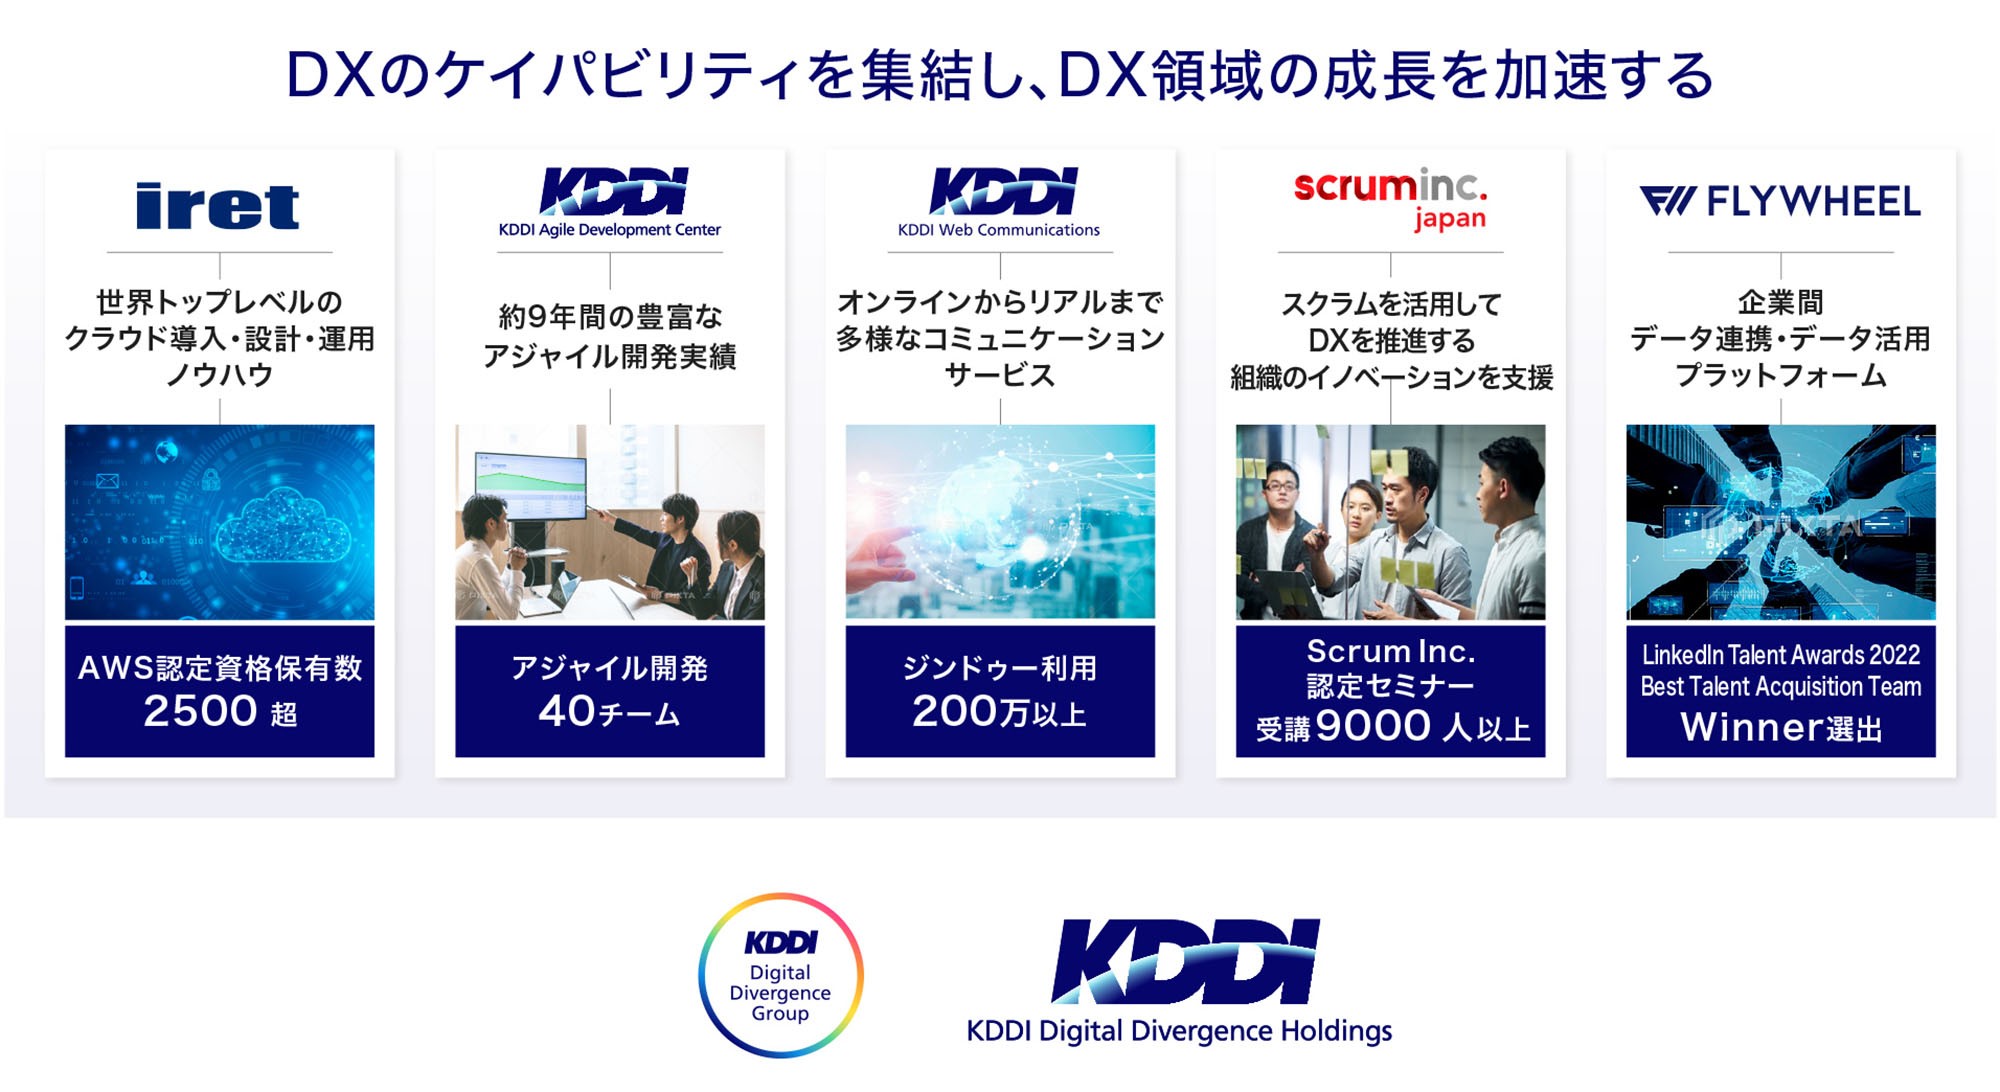 KDDI Digital Divergence Holdings傘下でDXのケイパビリティを集結し、 DX領域の成長を加速する。iret（世界トップレベルのクラウド導入・設計・運用ノウハウ）AWS認定資格保有数2500超、KDDI Agile Development Center（約9年間の豊富なアジャイル開発実績）アジャイル開発40チーム、KDDI Web Communications（オンラインからリアルまで多様なコミュニケーションサービス）ジンドゥー利用200万以上、scruminc.japan（スクラムを活用してDXを推進する組織のイノベーションを支援）Scrum Inc.認定セミナー受講9000人以上、FlFLYWHEEL（企業間データ連携・データ活用プラットフォーム）LinkedIn Talent Awards 2022 Best Talent Acquisition Team Winner選出。